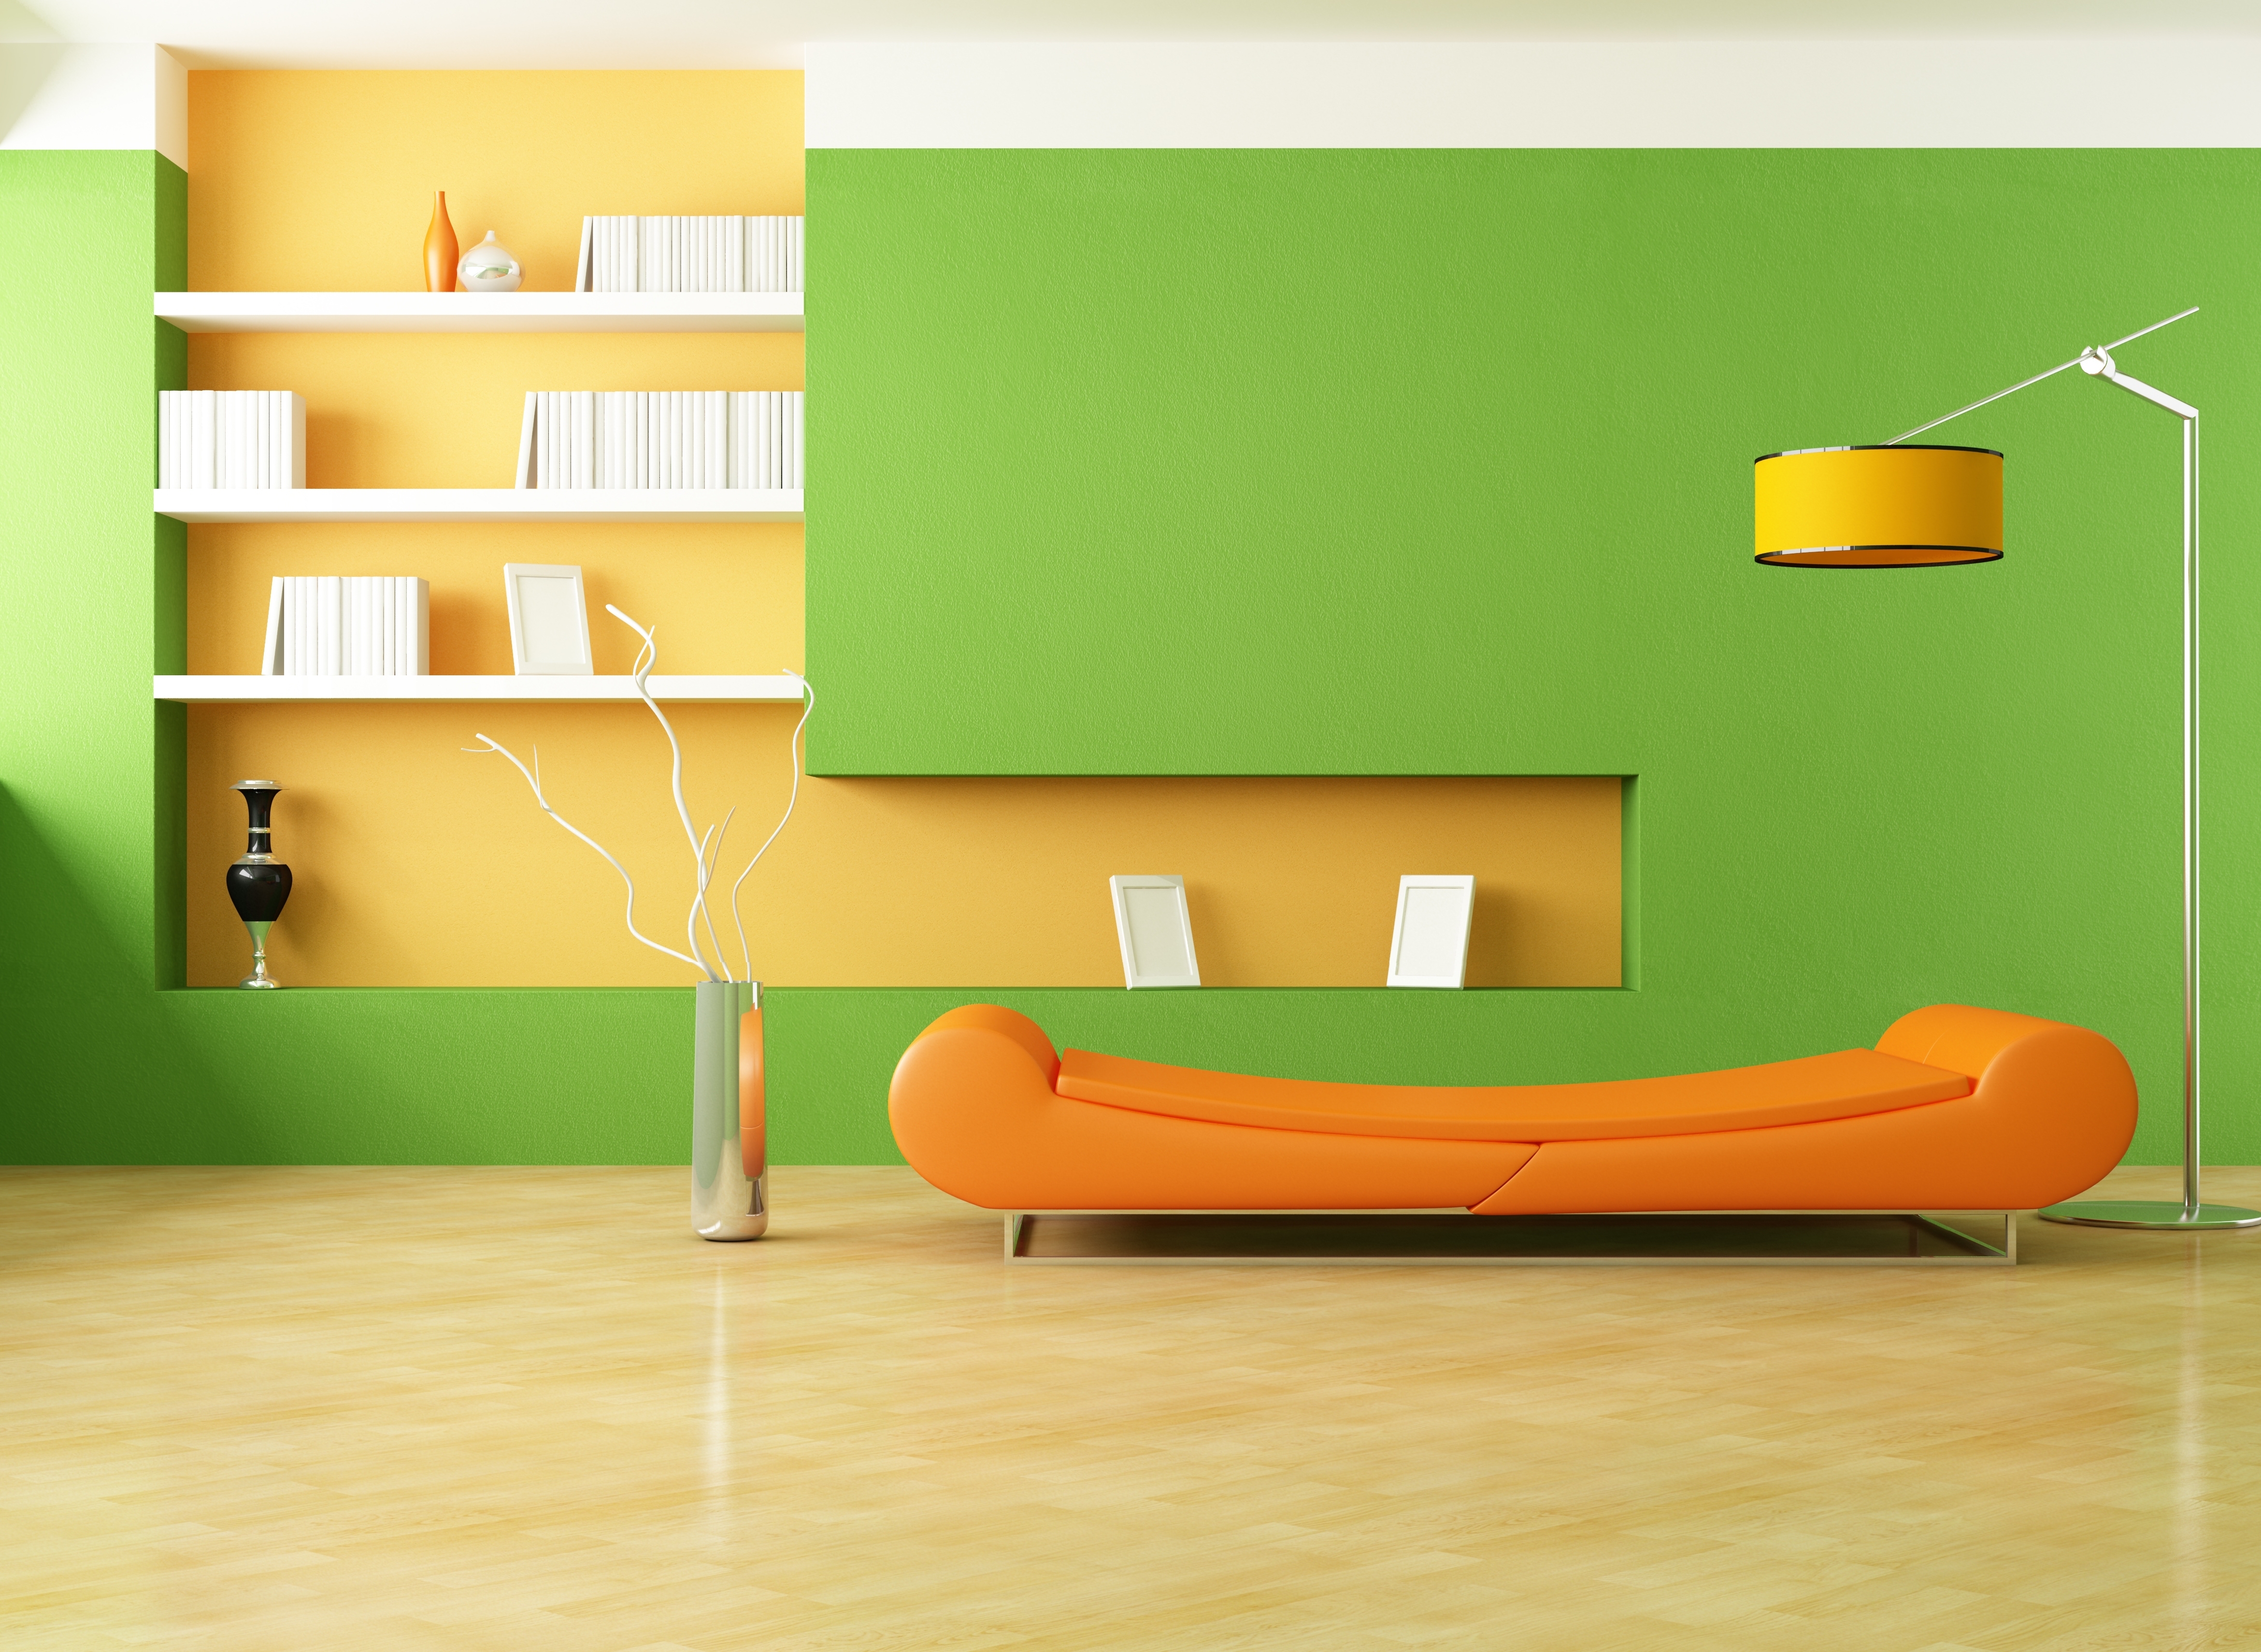 orange, minimalism, room, interior, miscellanea, miscellaneous, design, lamp, style, sofa, vases